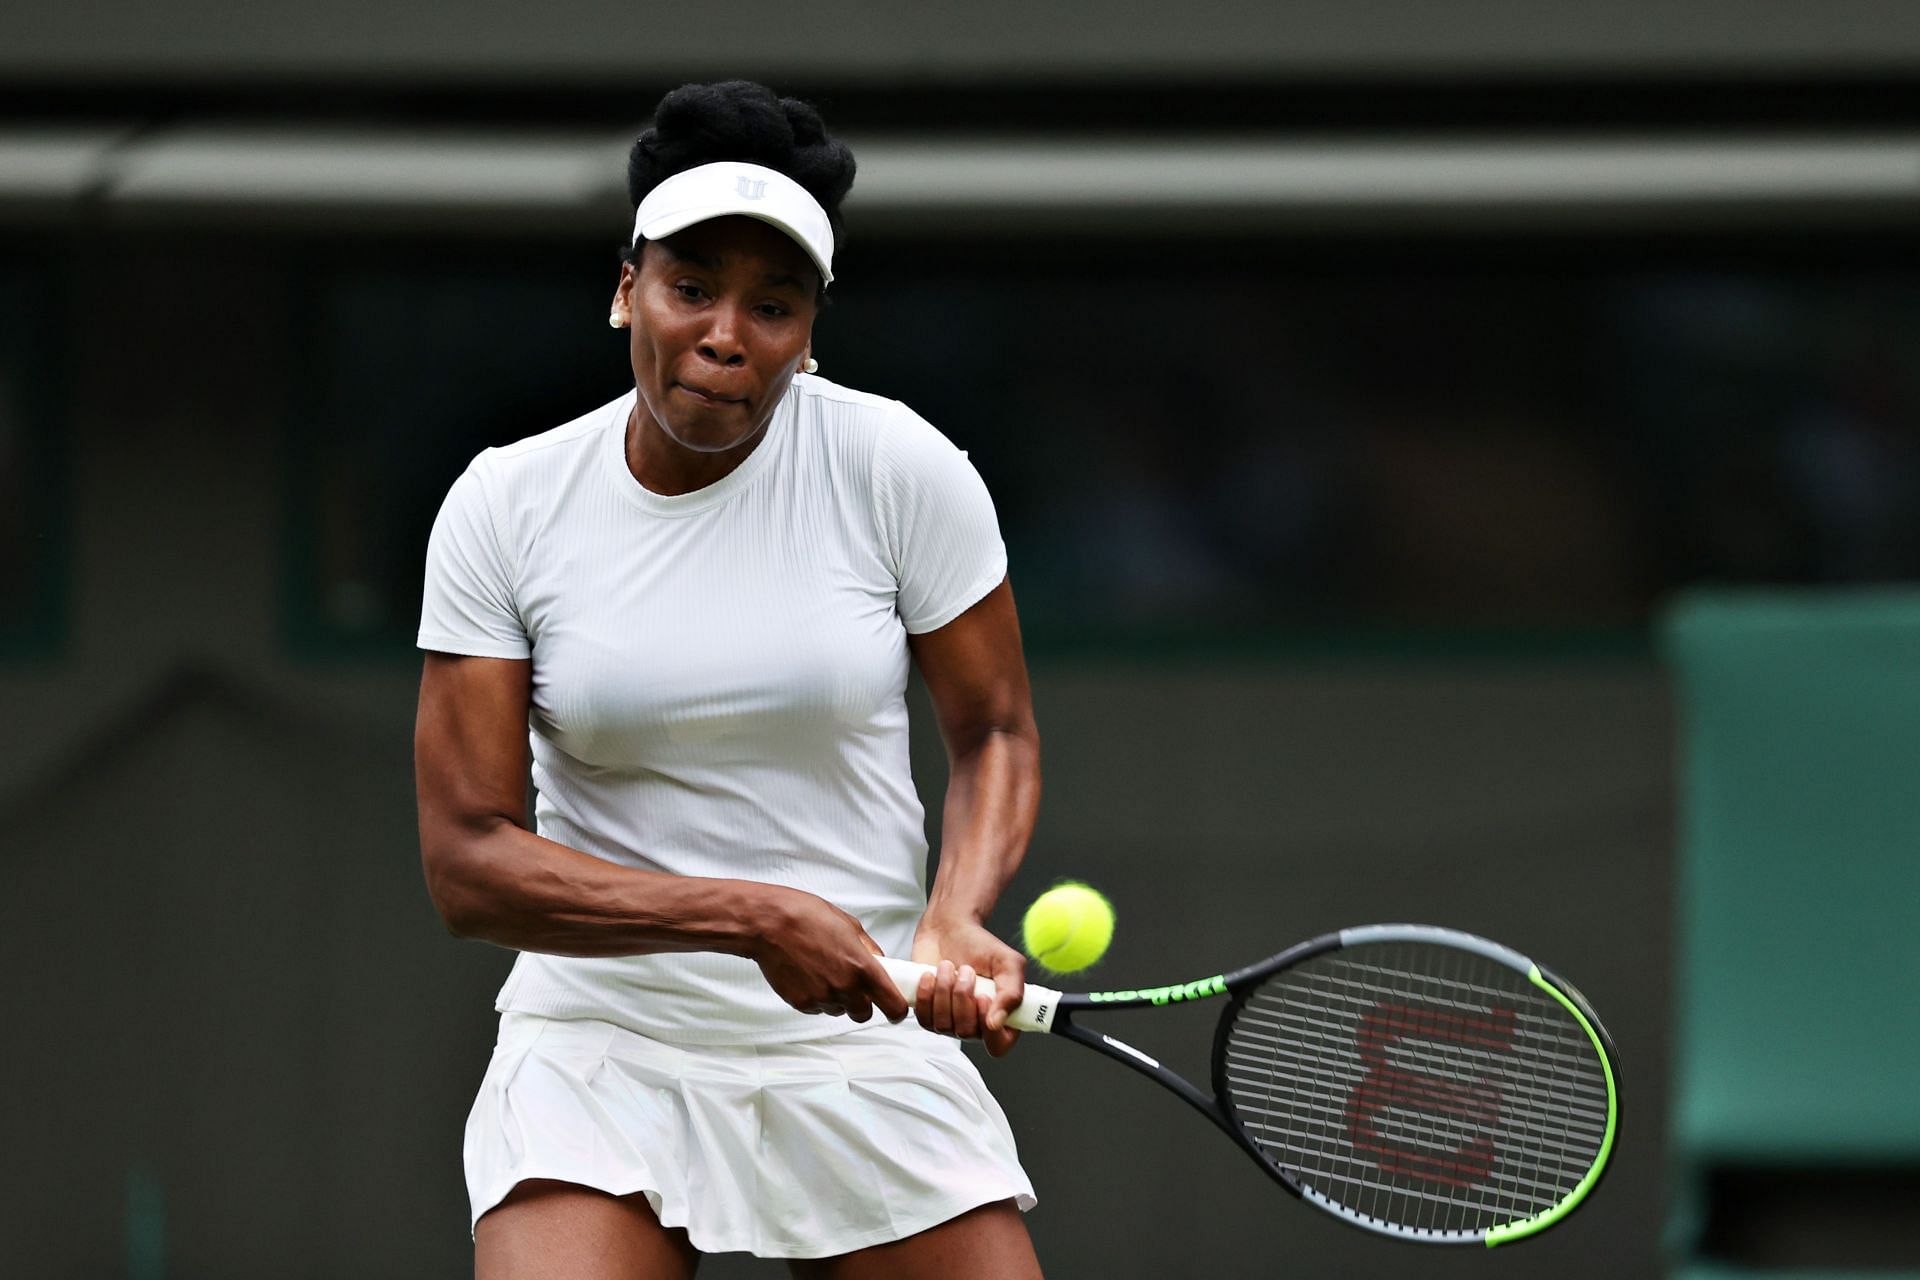 Venus Williams in action at Wimbledon 2021